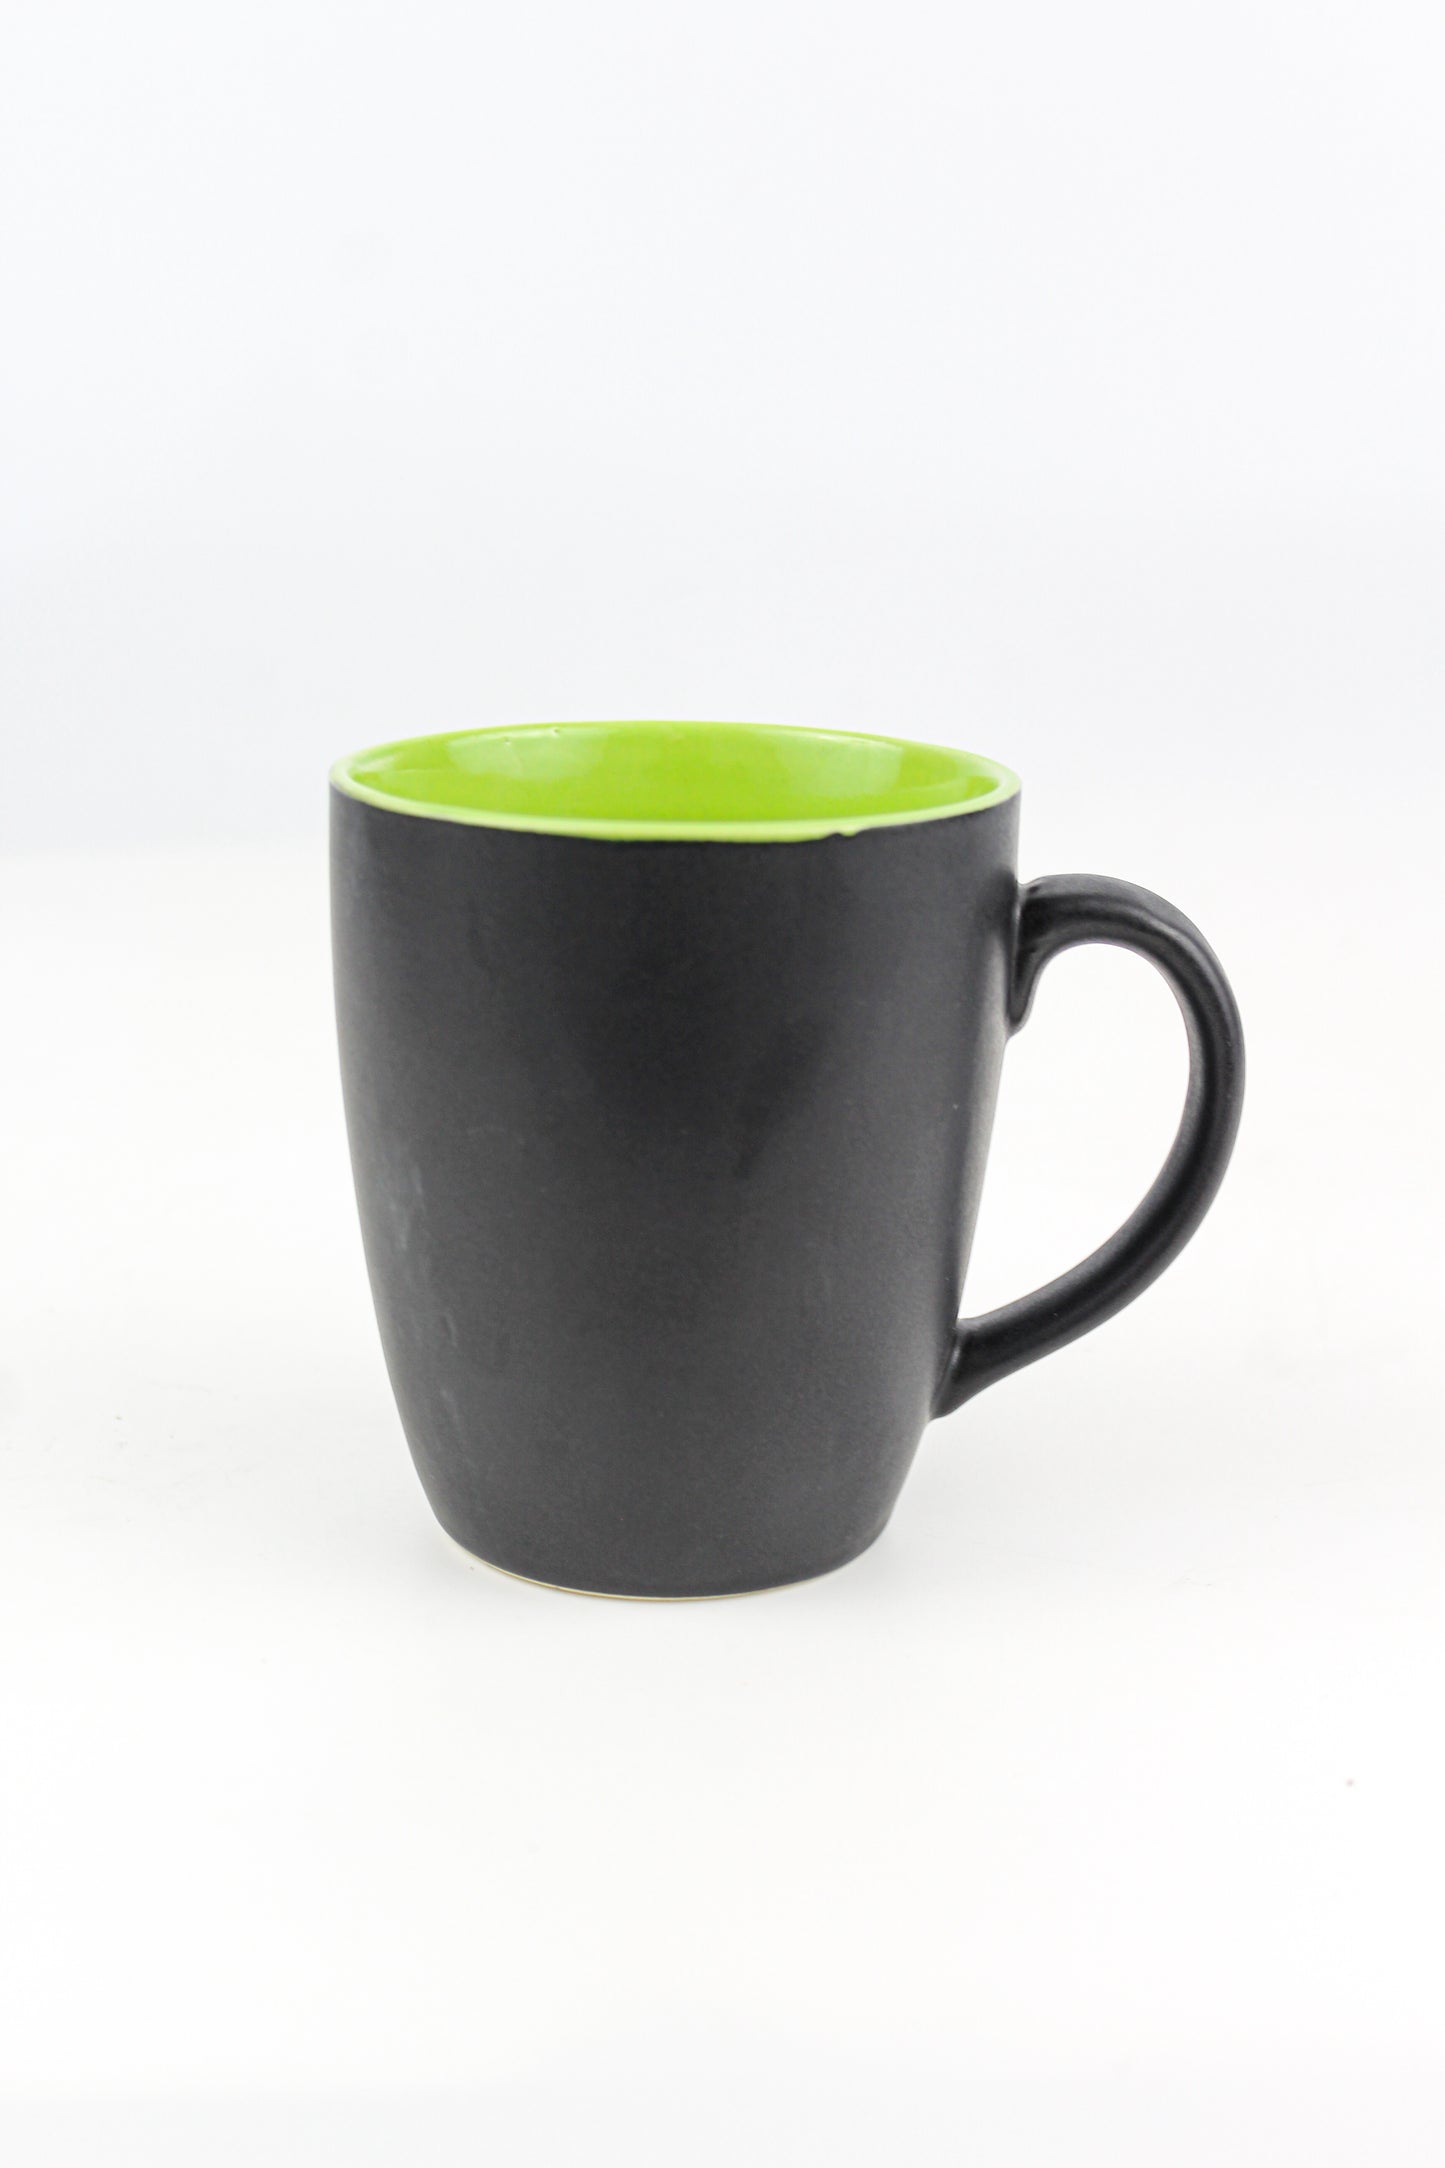 l'heure du cafe - Leaf Green Handcrafted Ceramic Coffee Mugs